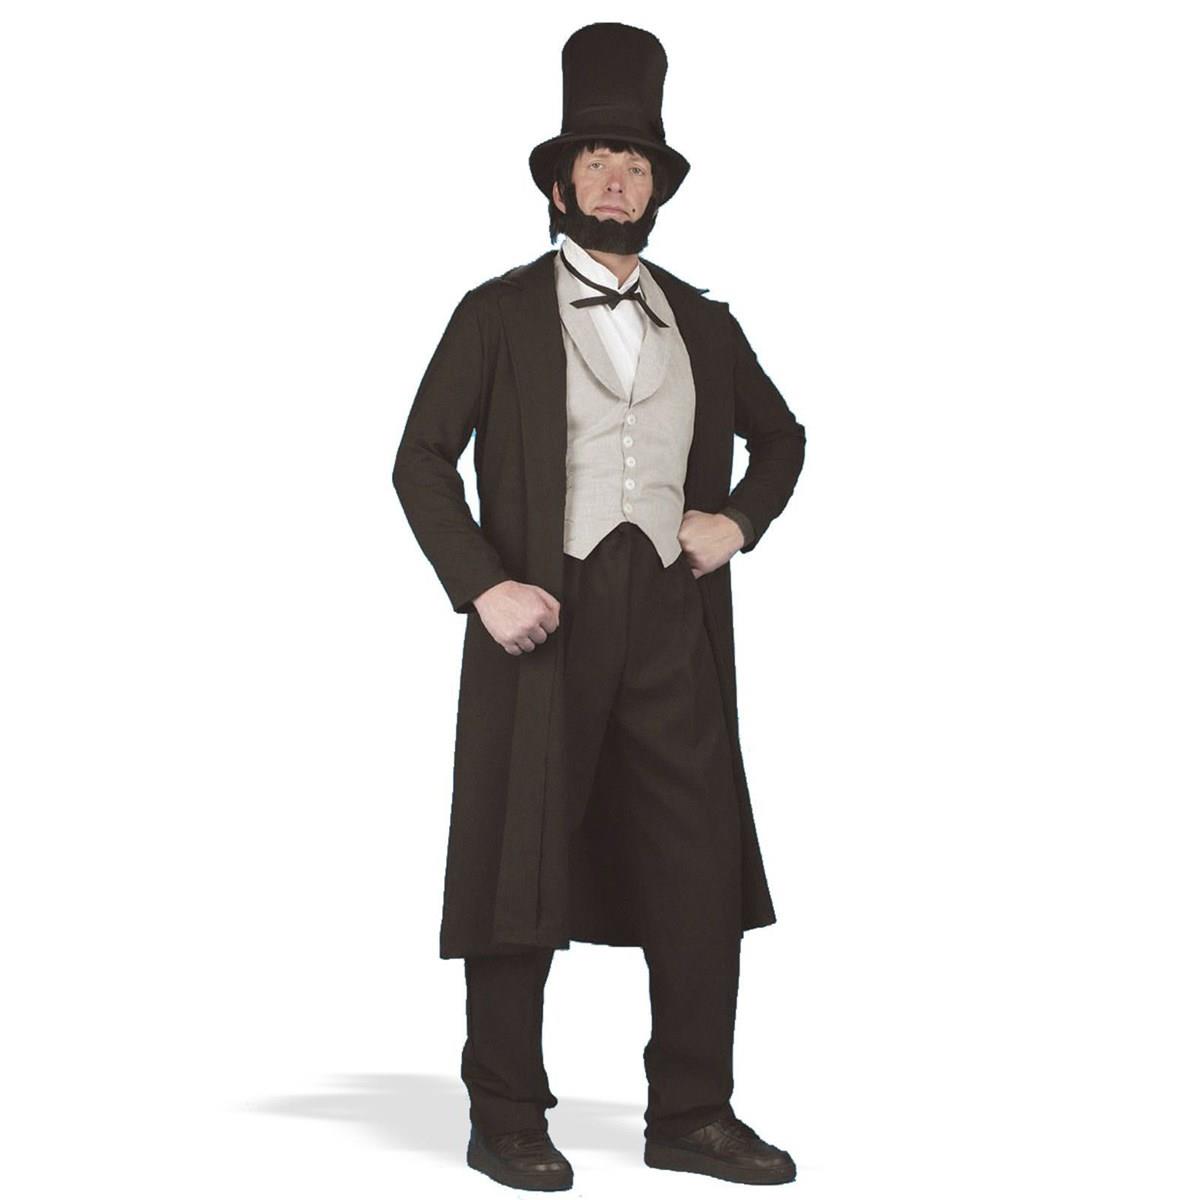 275676 Abraham Lincoln Adult Costume - Medium